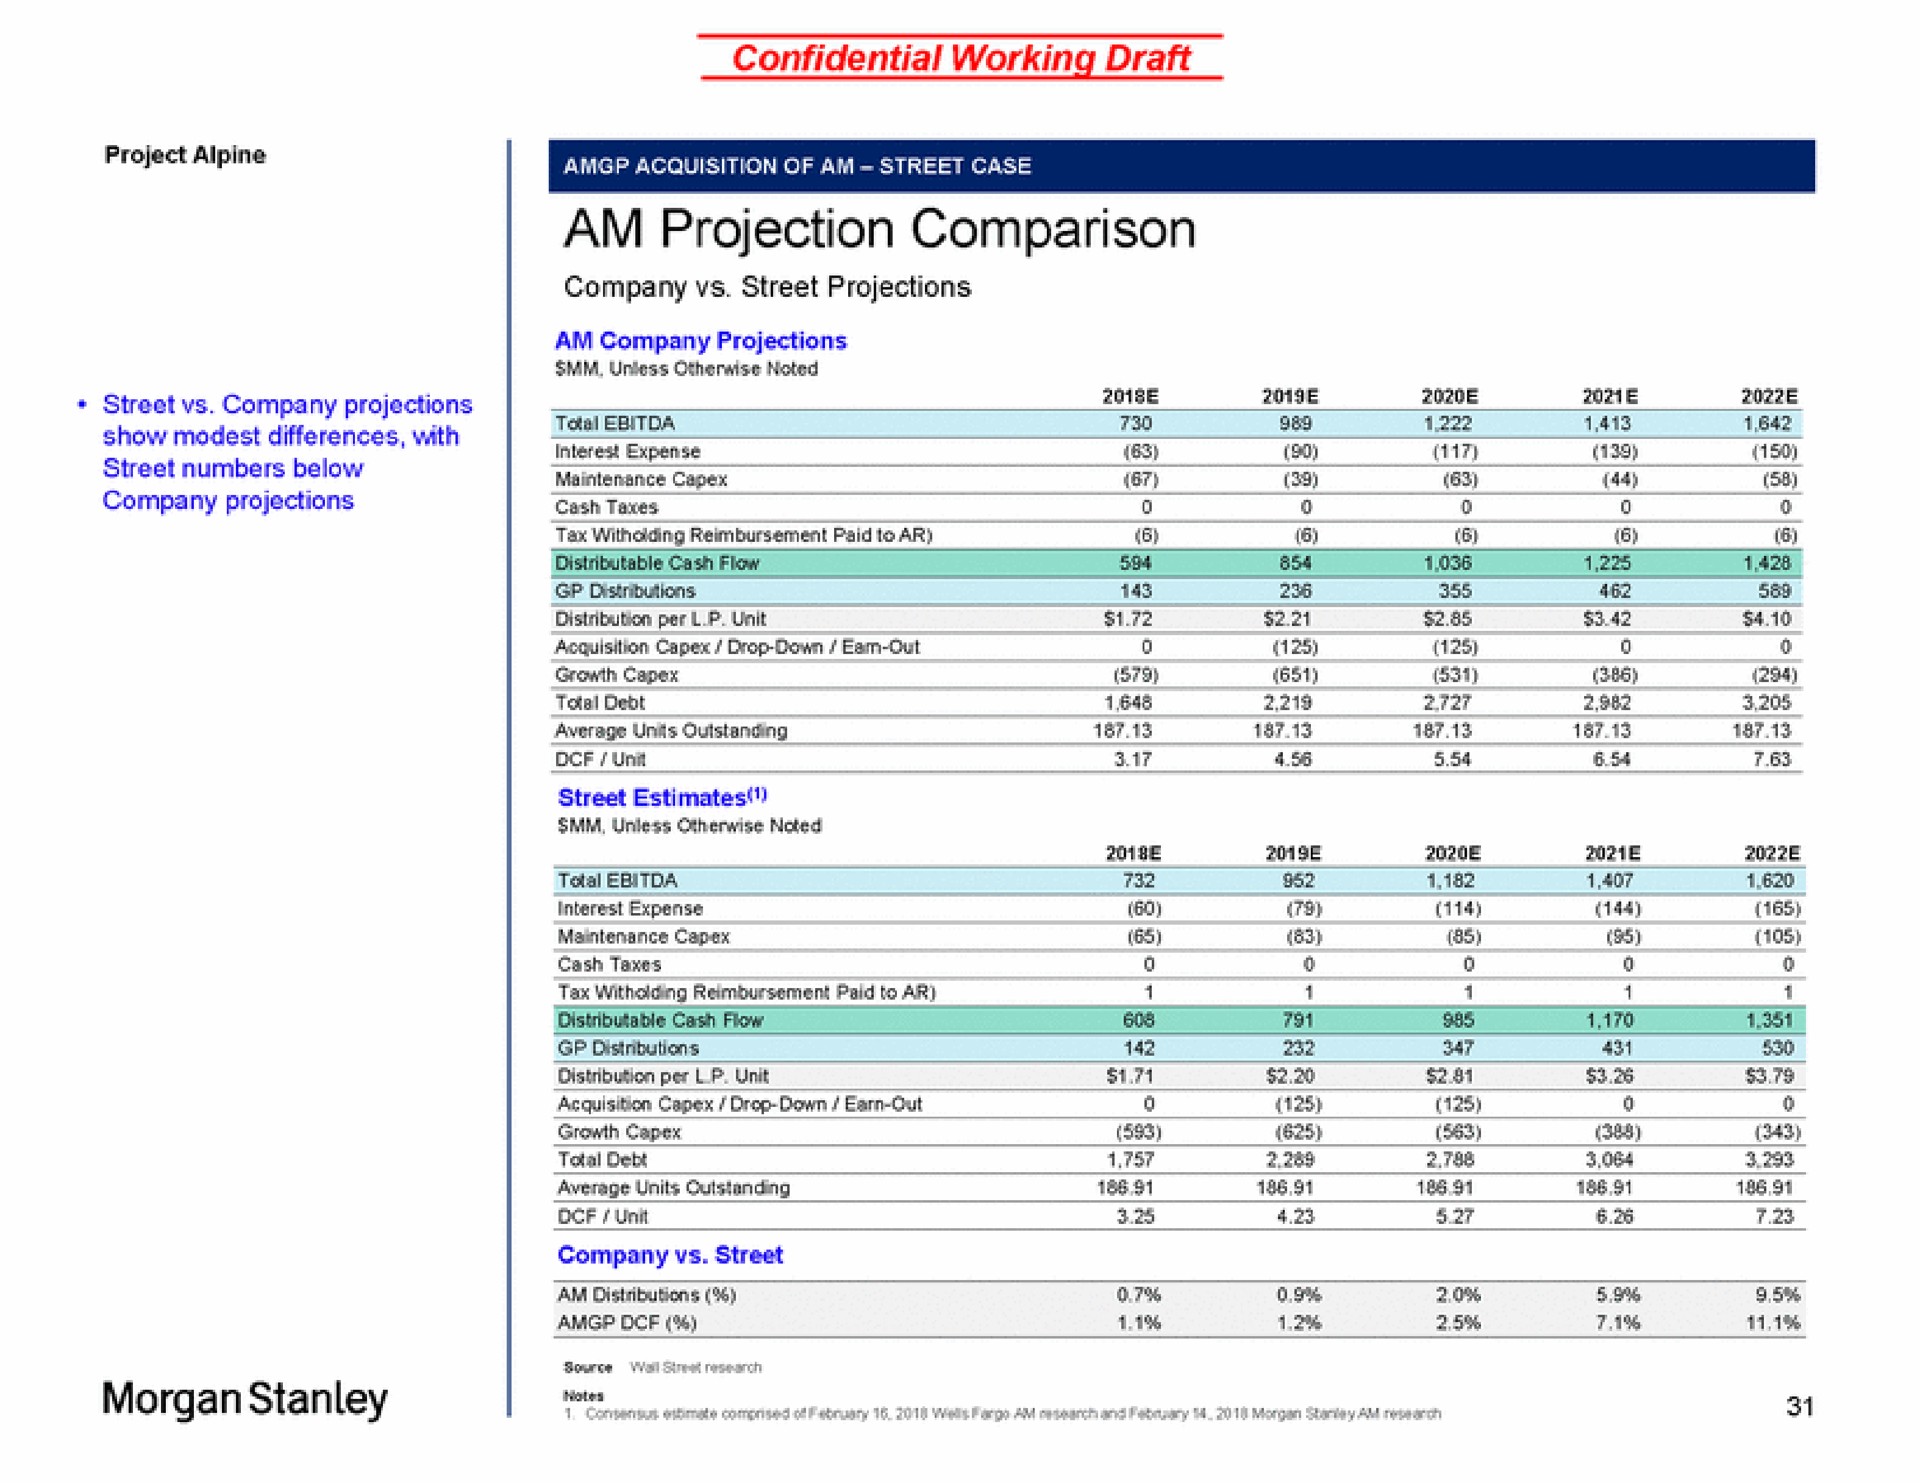 am projection comparison | Morgan Stanley